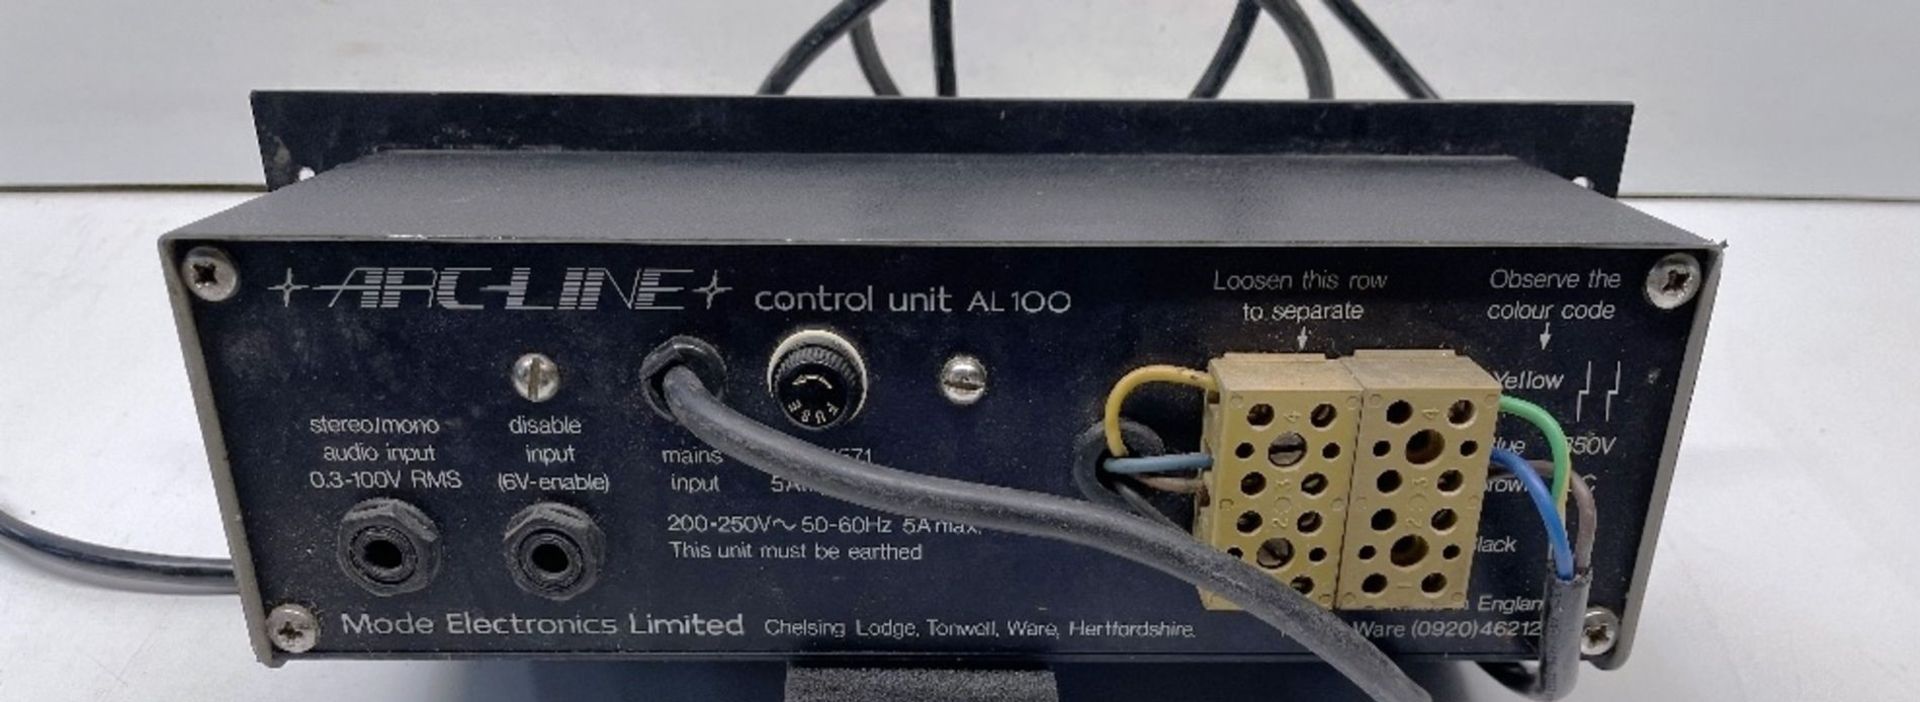 Arc Line AL100 Control Unit - Image 3 of 3